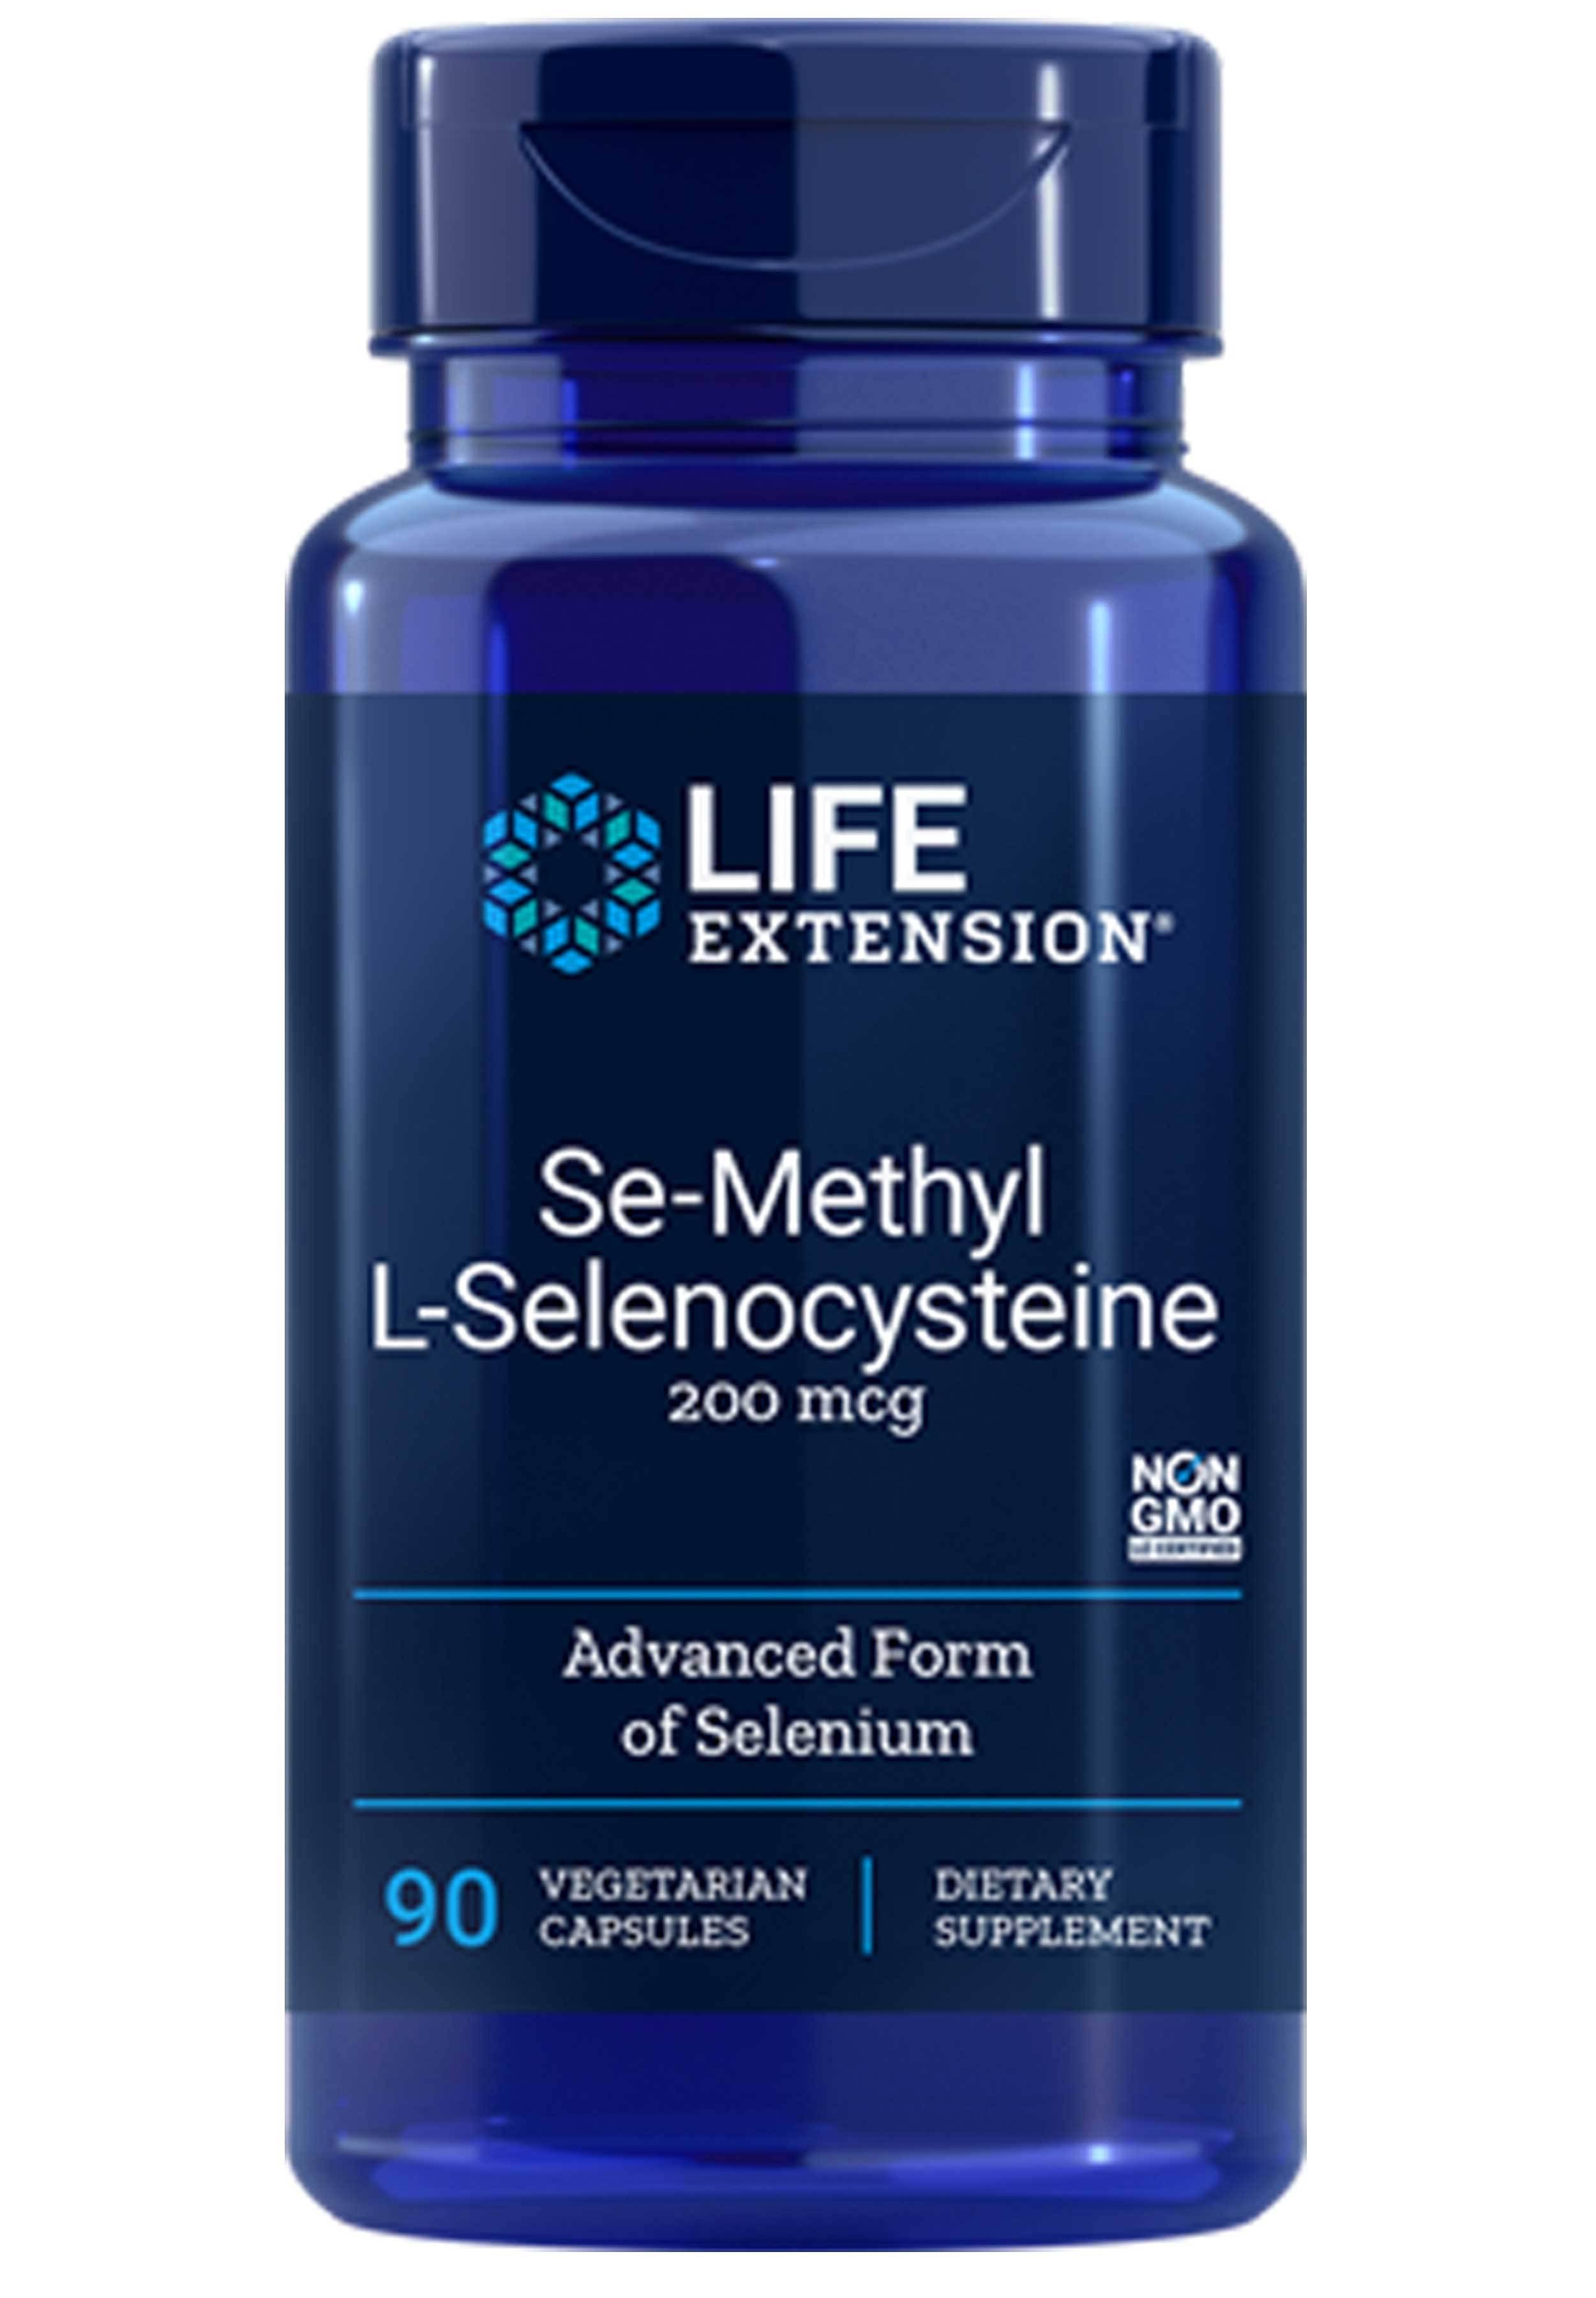 Life Extension Se-Methyl L-Selenocysteine Dietary Supplement - 200mg, 90ct